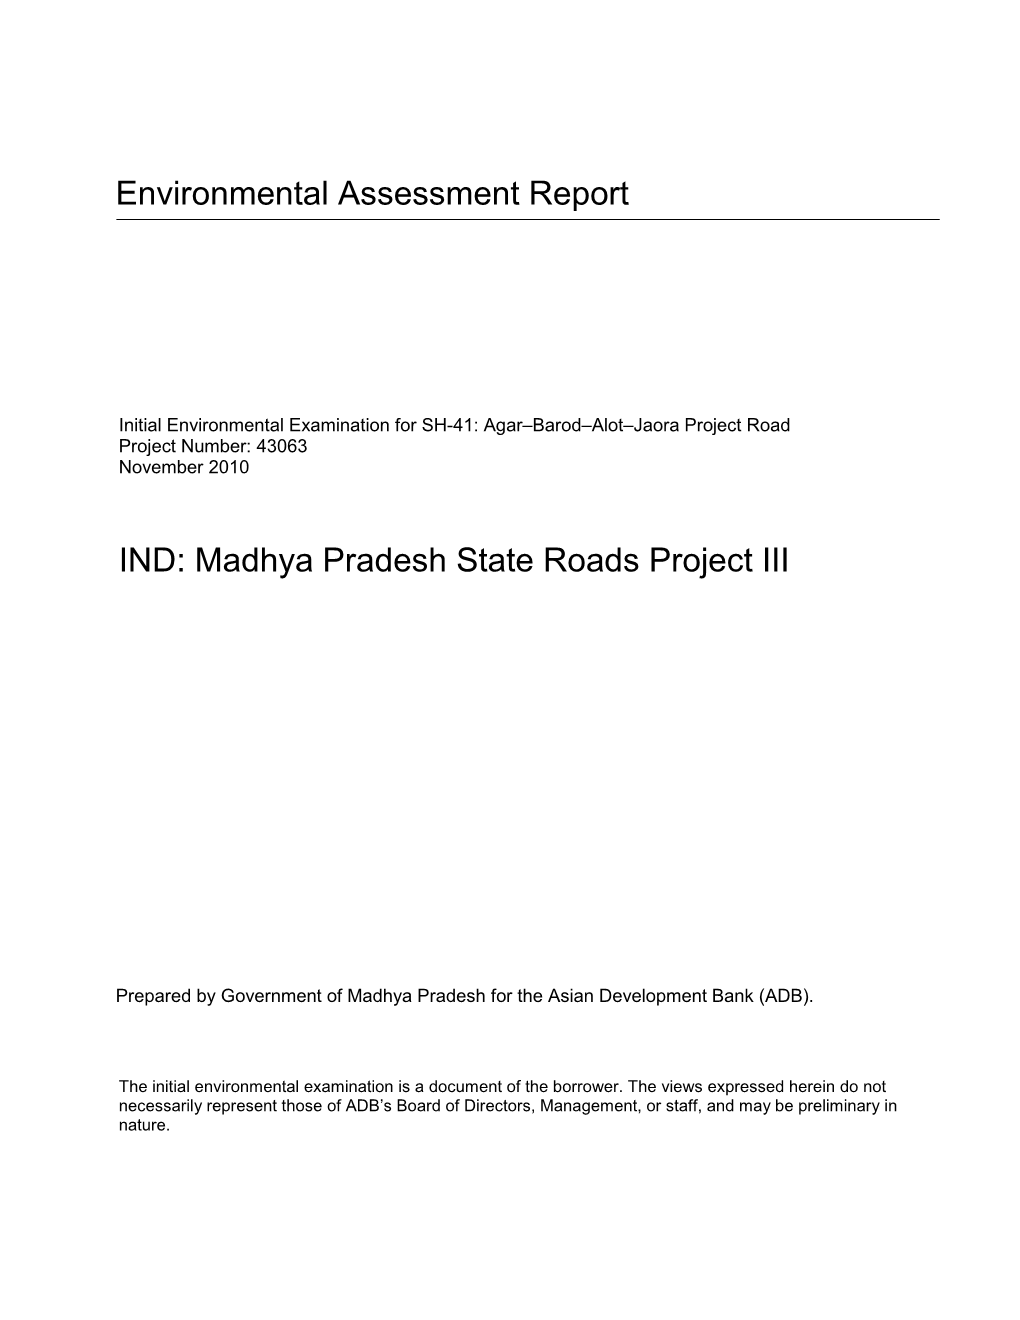 IEE: India: Initial Environmental Examination: India: Madhya